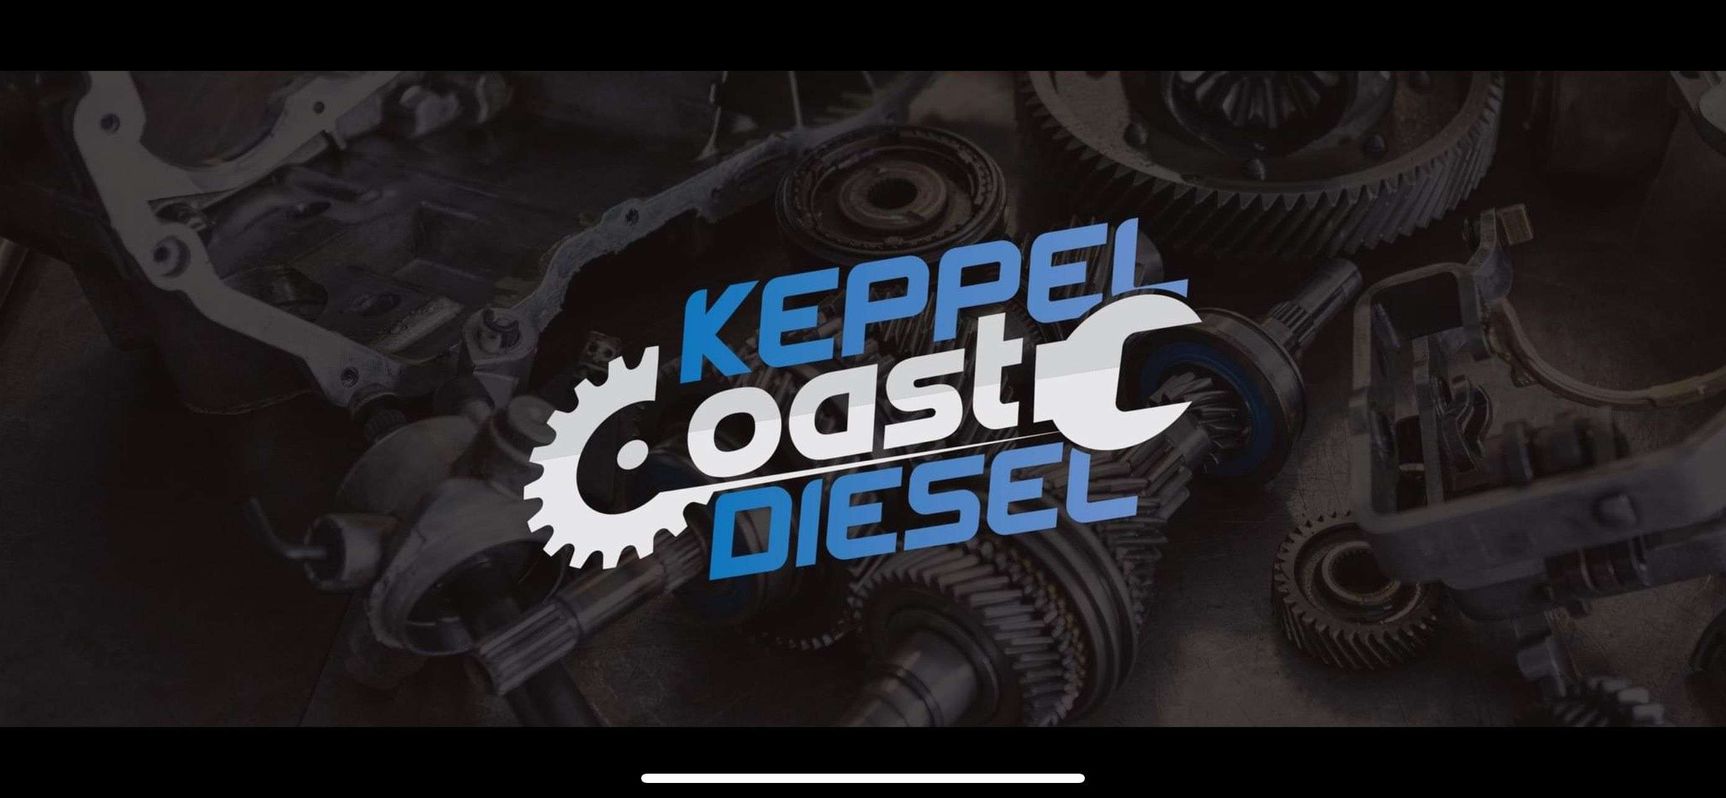 Keppel Coast Diesel featured image